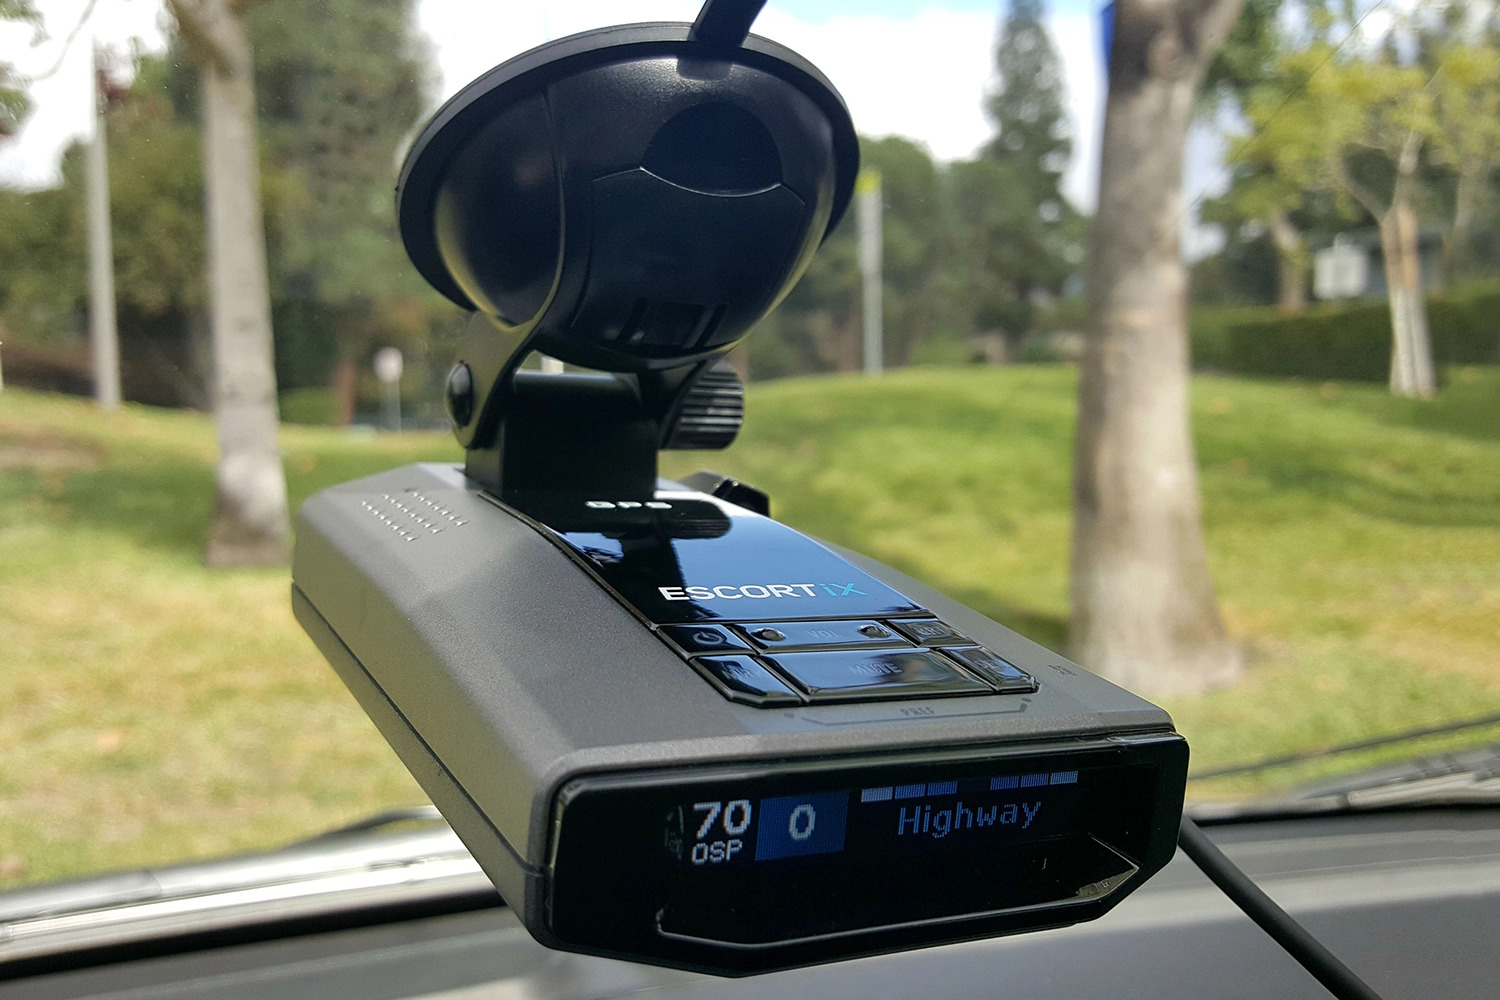 Escort IX Review: An Intelligent Radar Detector That Learns As You Drive